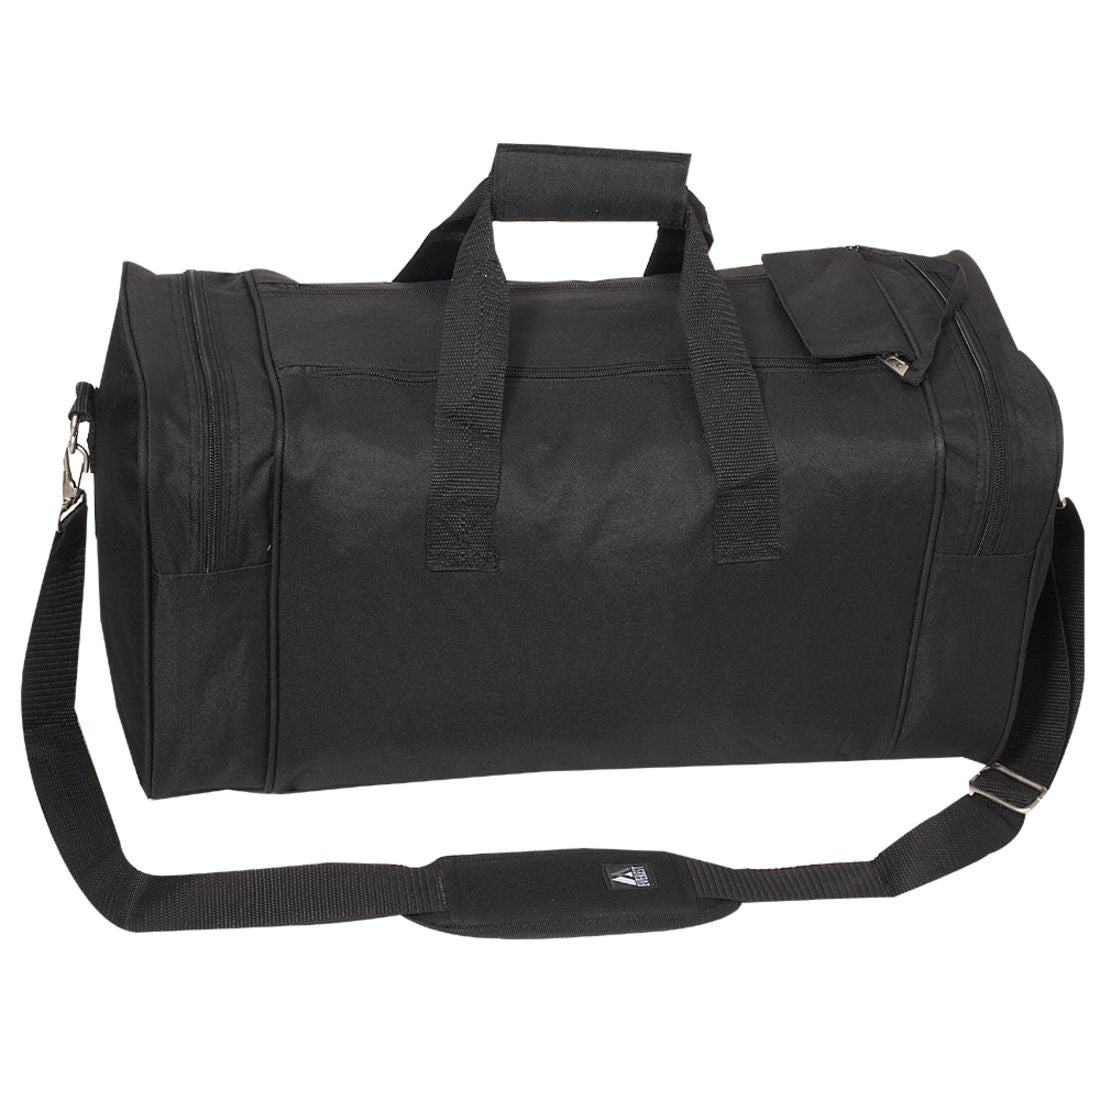 Everest Small Classic Gear Duffle Bag - Black, adult unisex